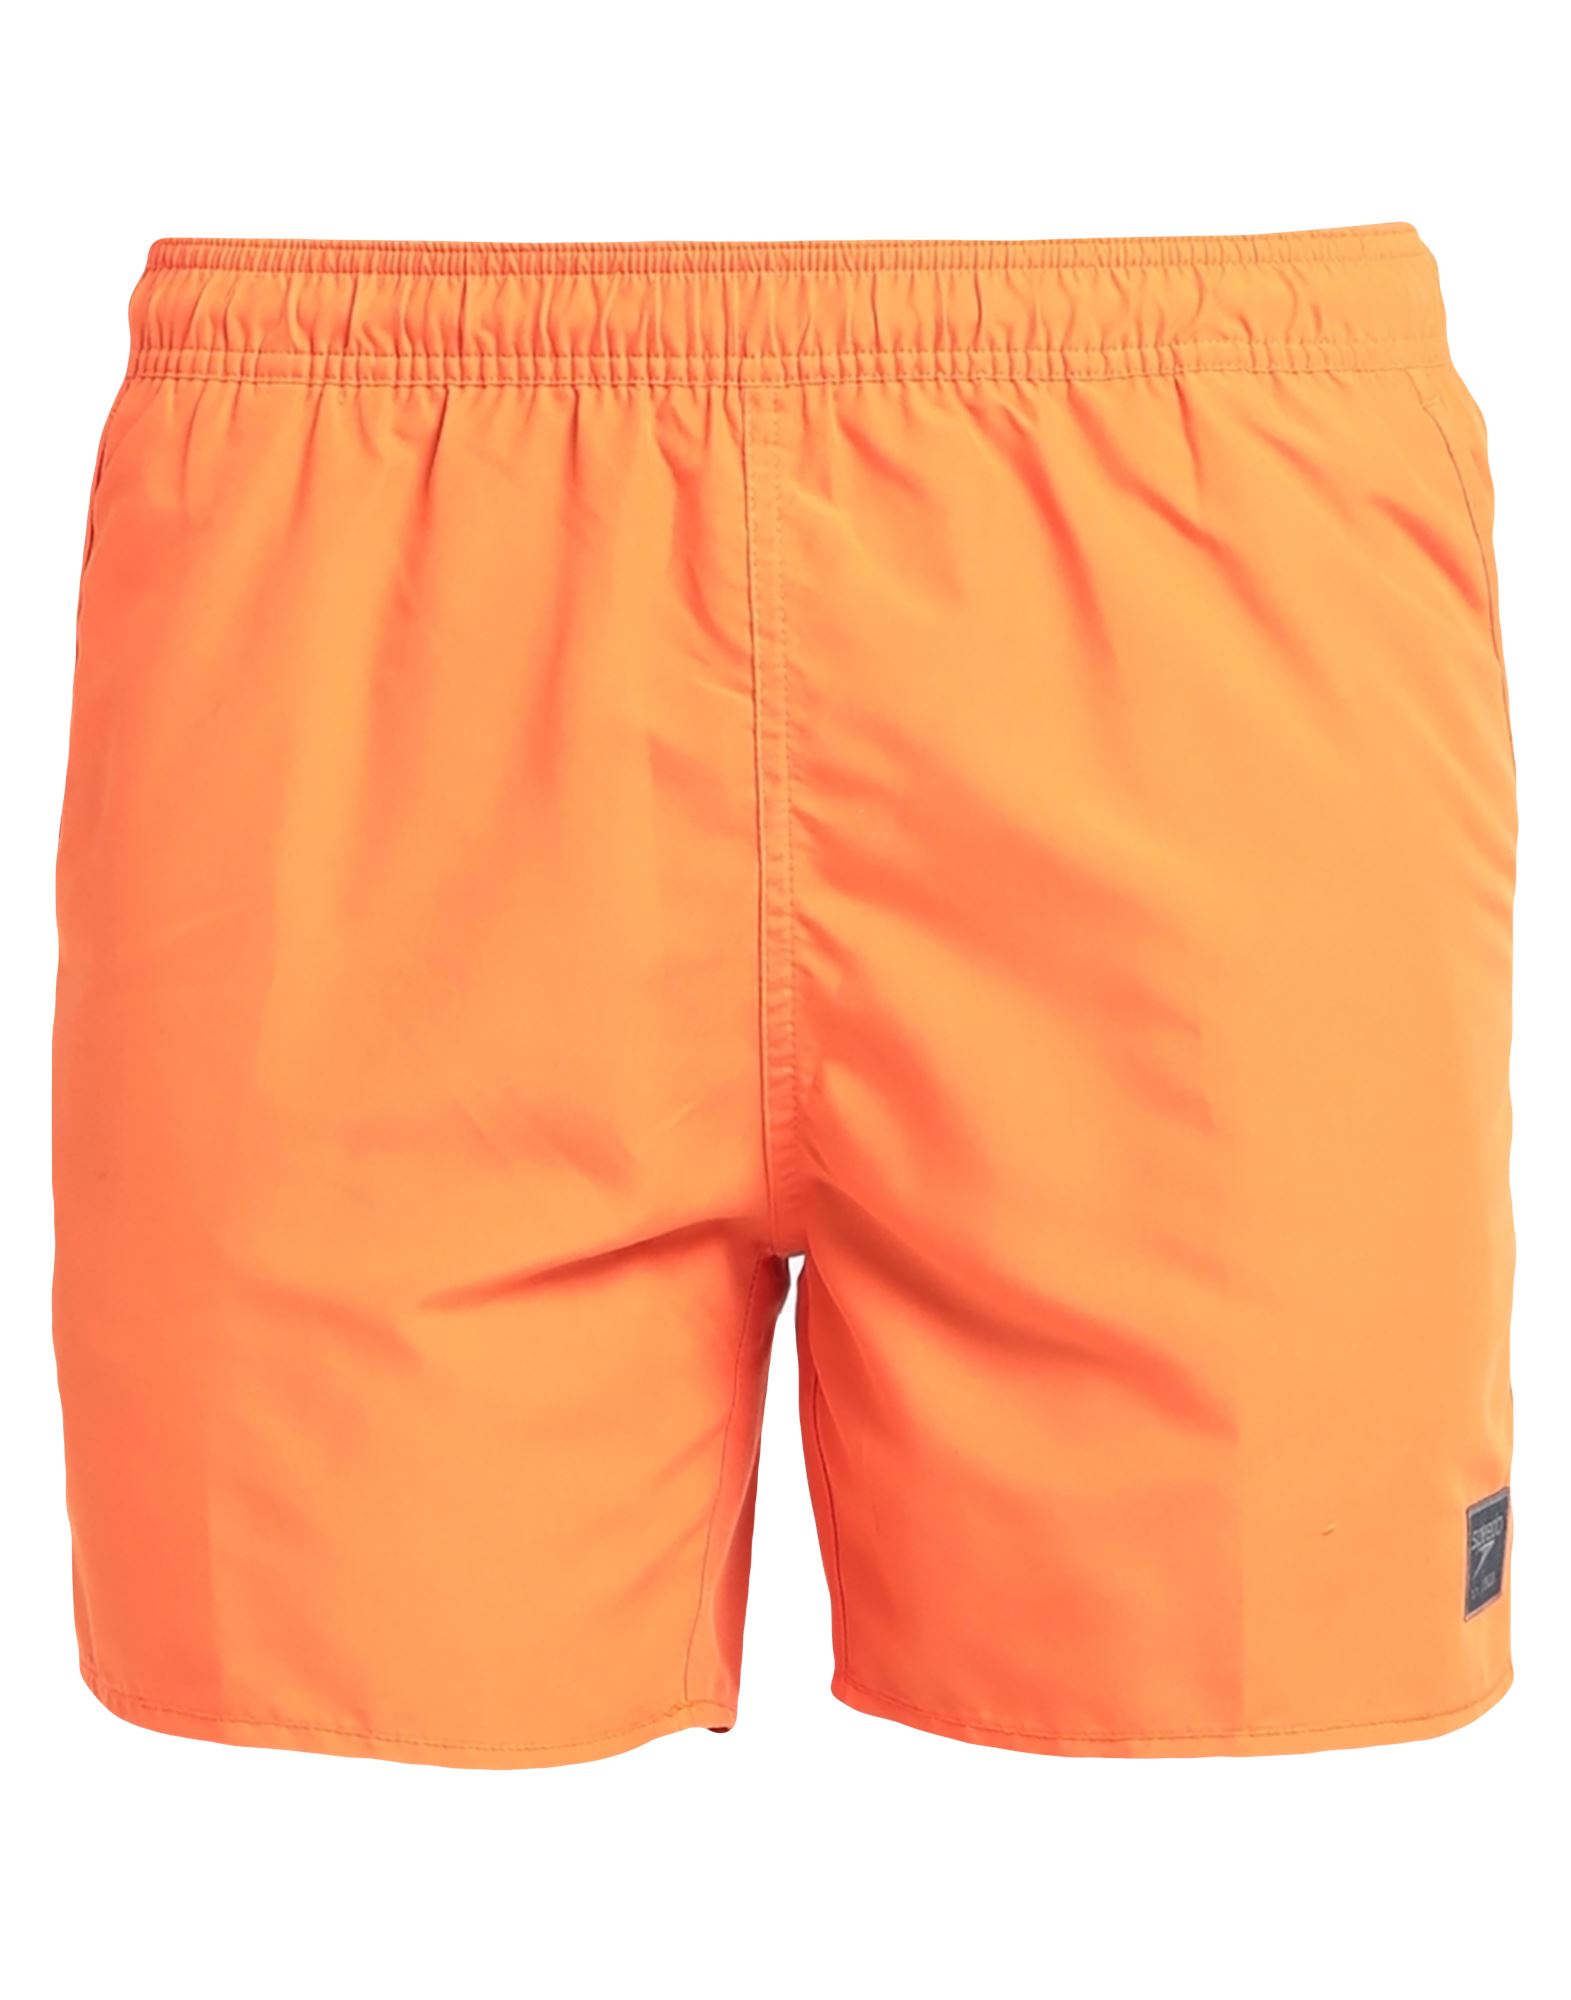 Speedo Swim Trunks In Orange